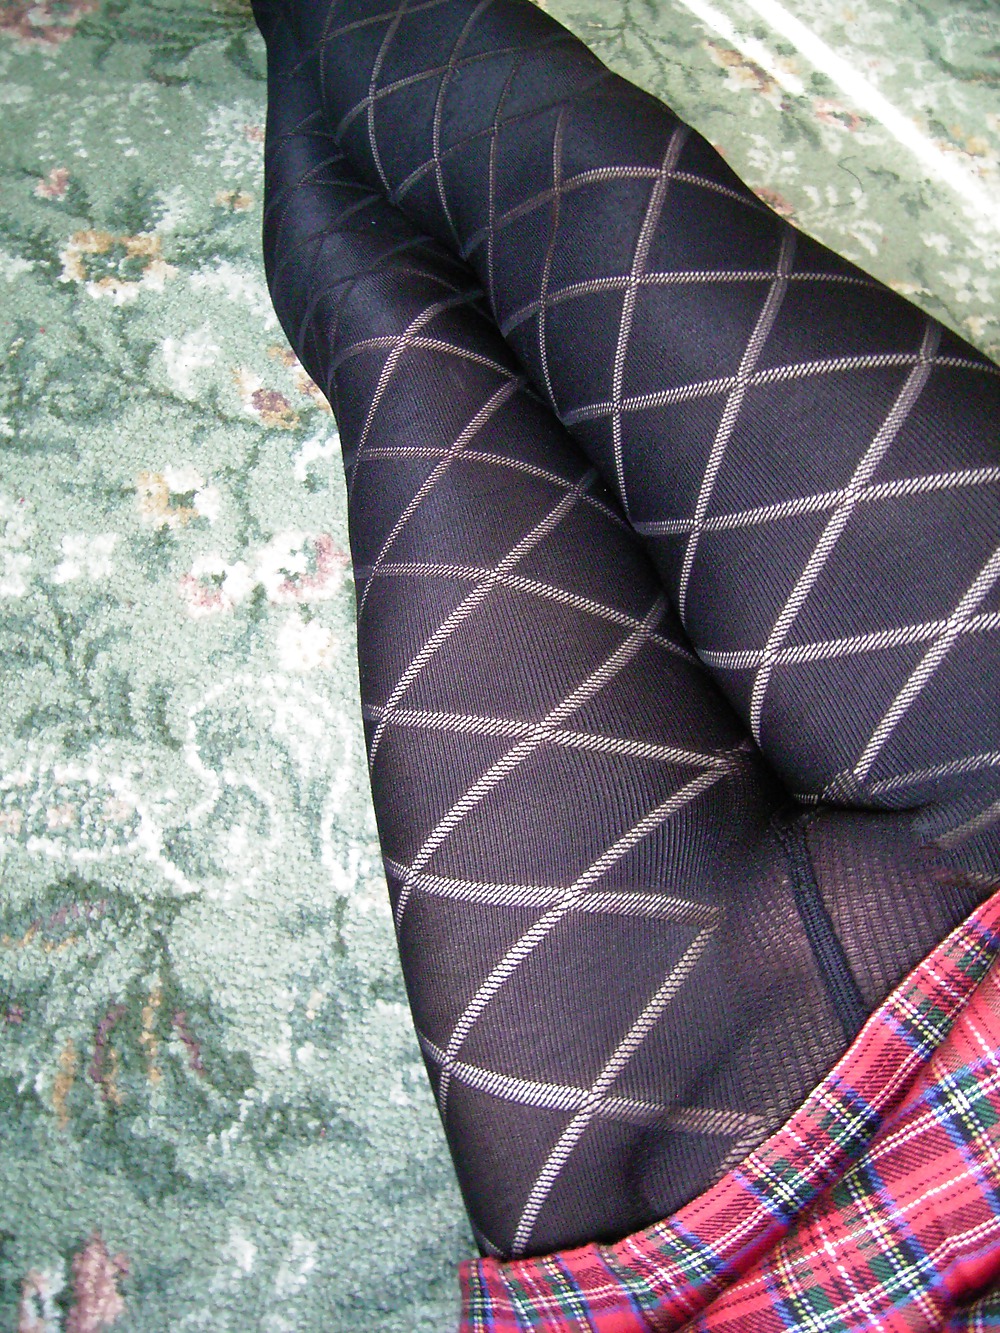 Sexy tights, nylon pantyhose and short skirt #10362756